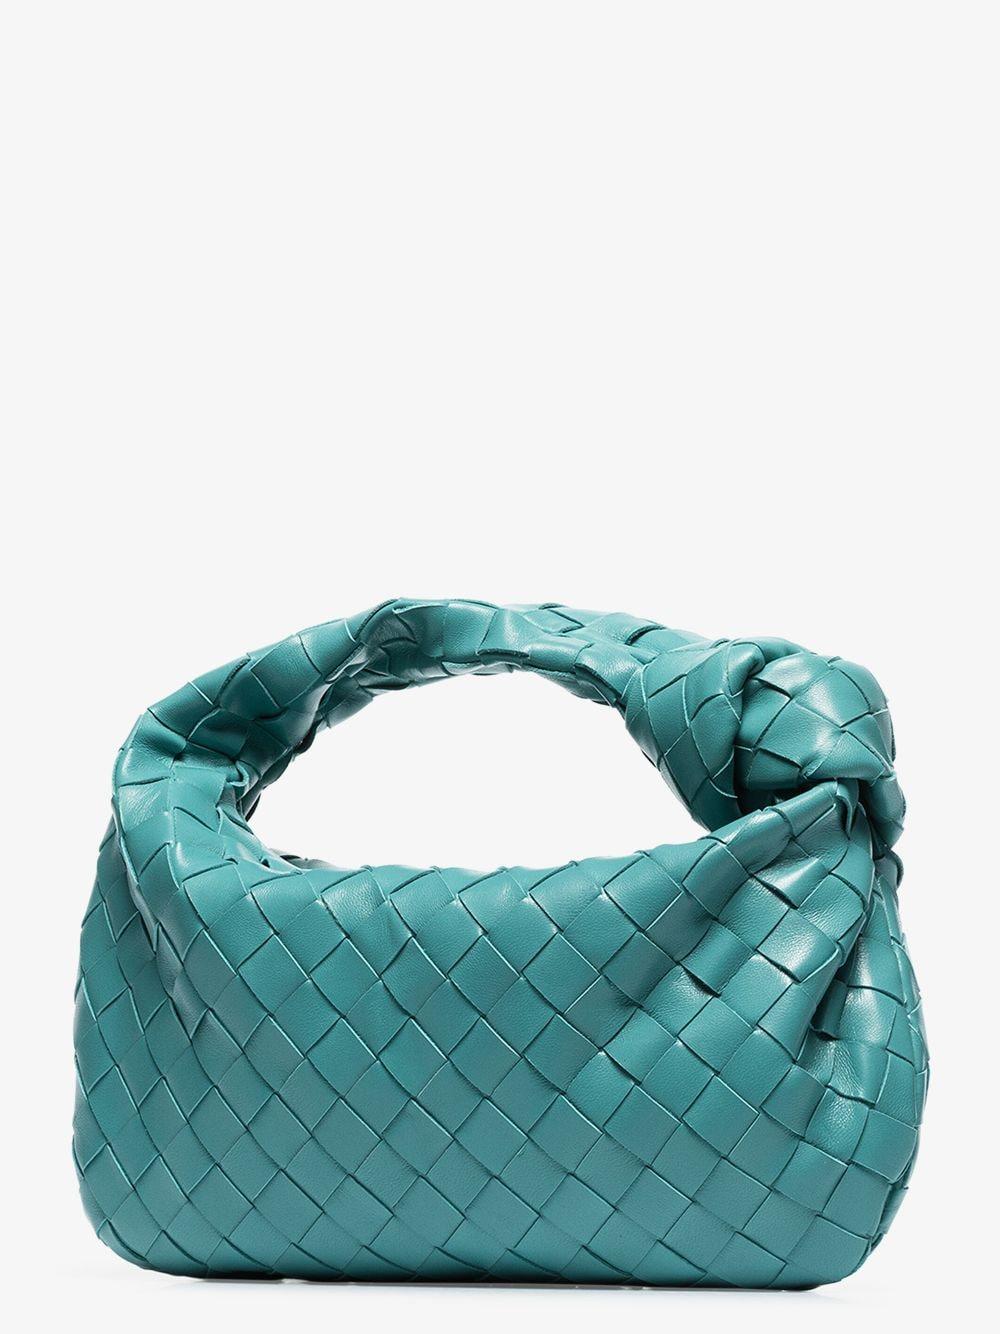 Bottega Veneta Bv Jodie Leather Mini Bag in Blue - Lyst